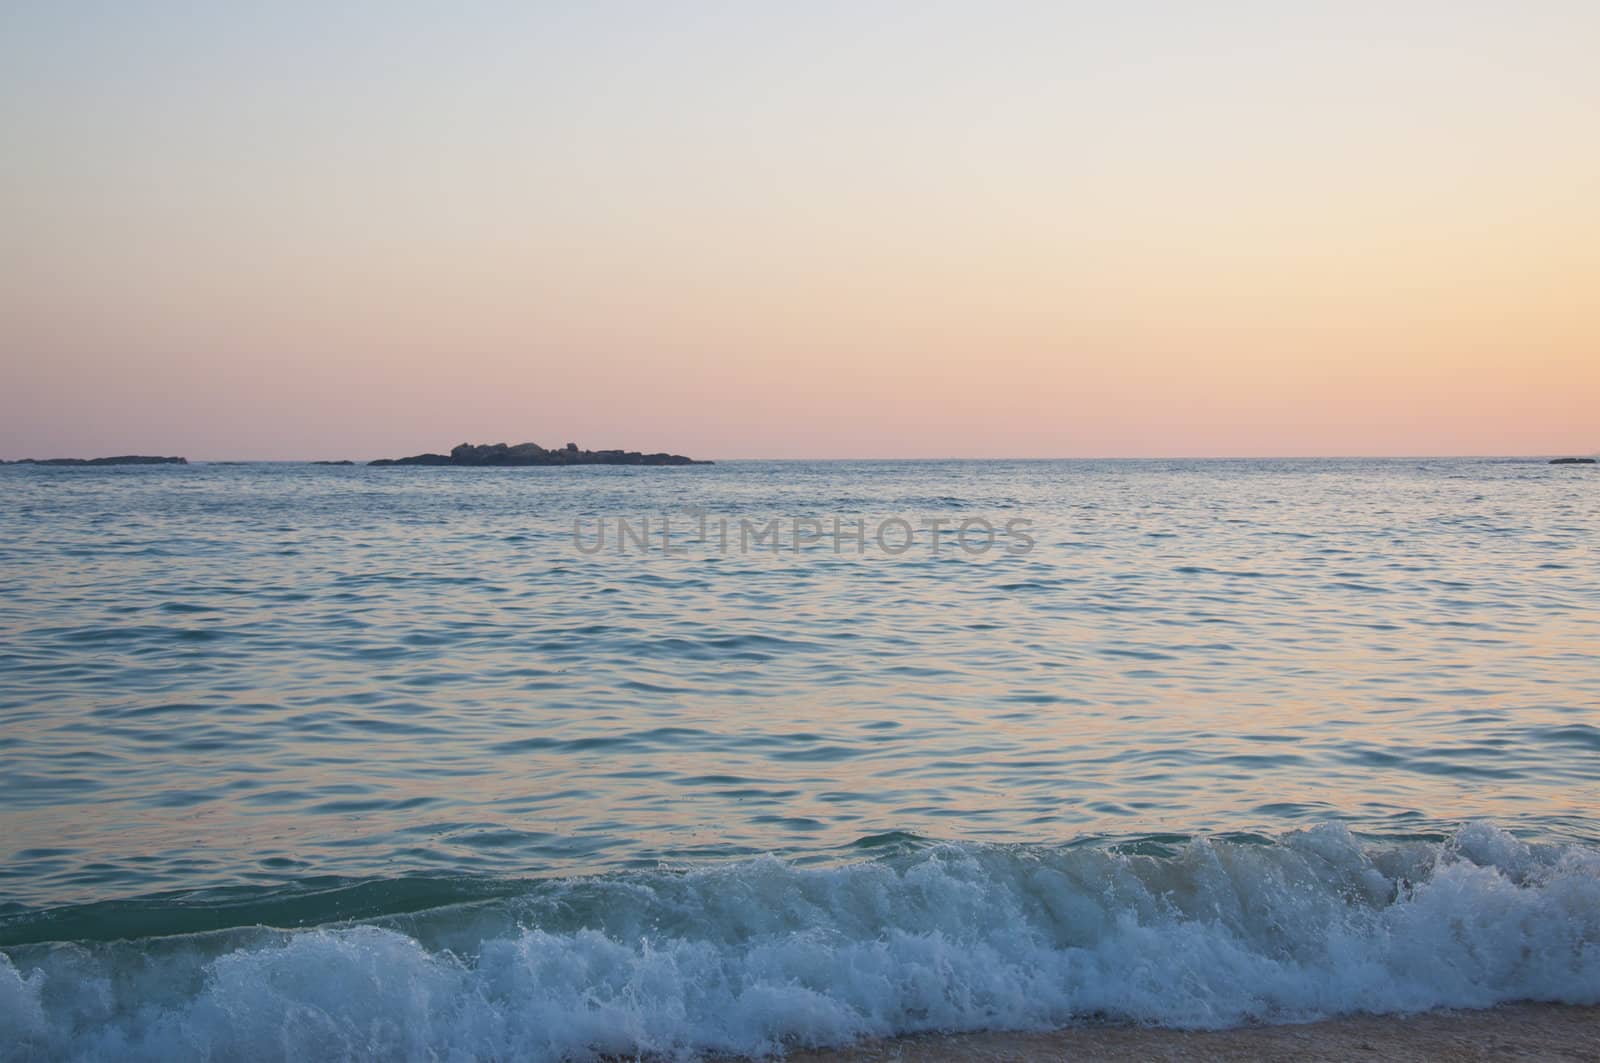 The view of the Indian Ocean from Unawatuna Beach, Sri Lanka